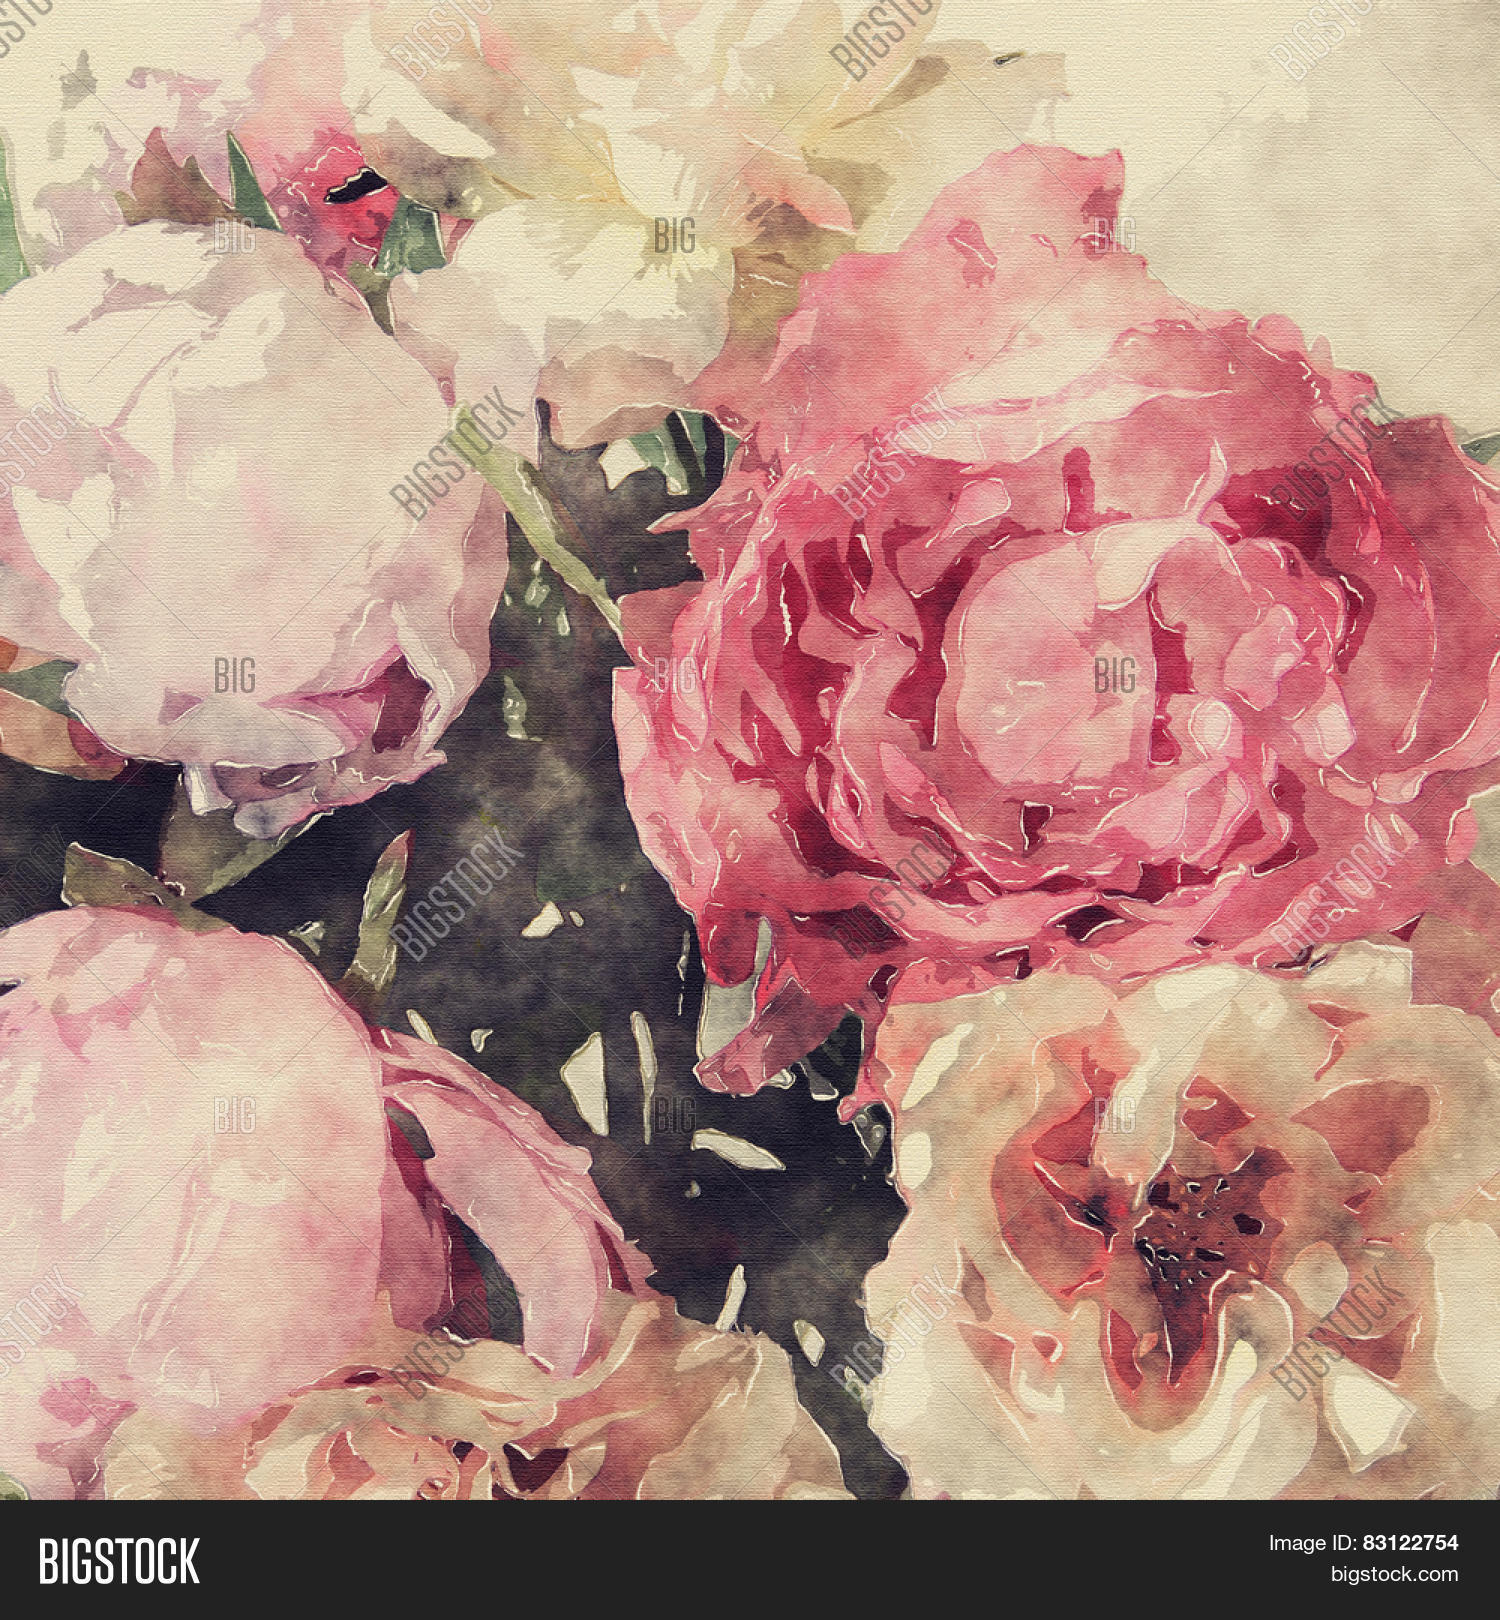 Art Grunge Floral Warm Sepia Image & Photo | Bigstock